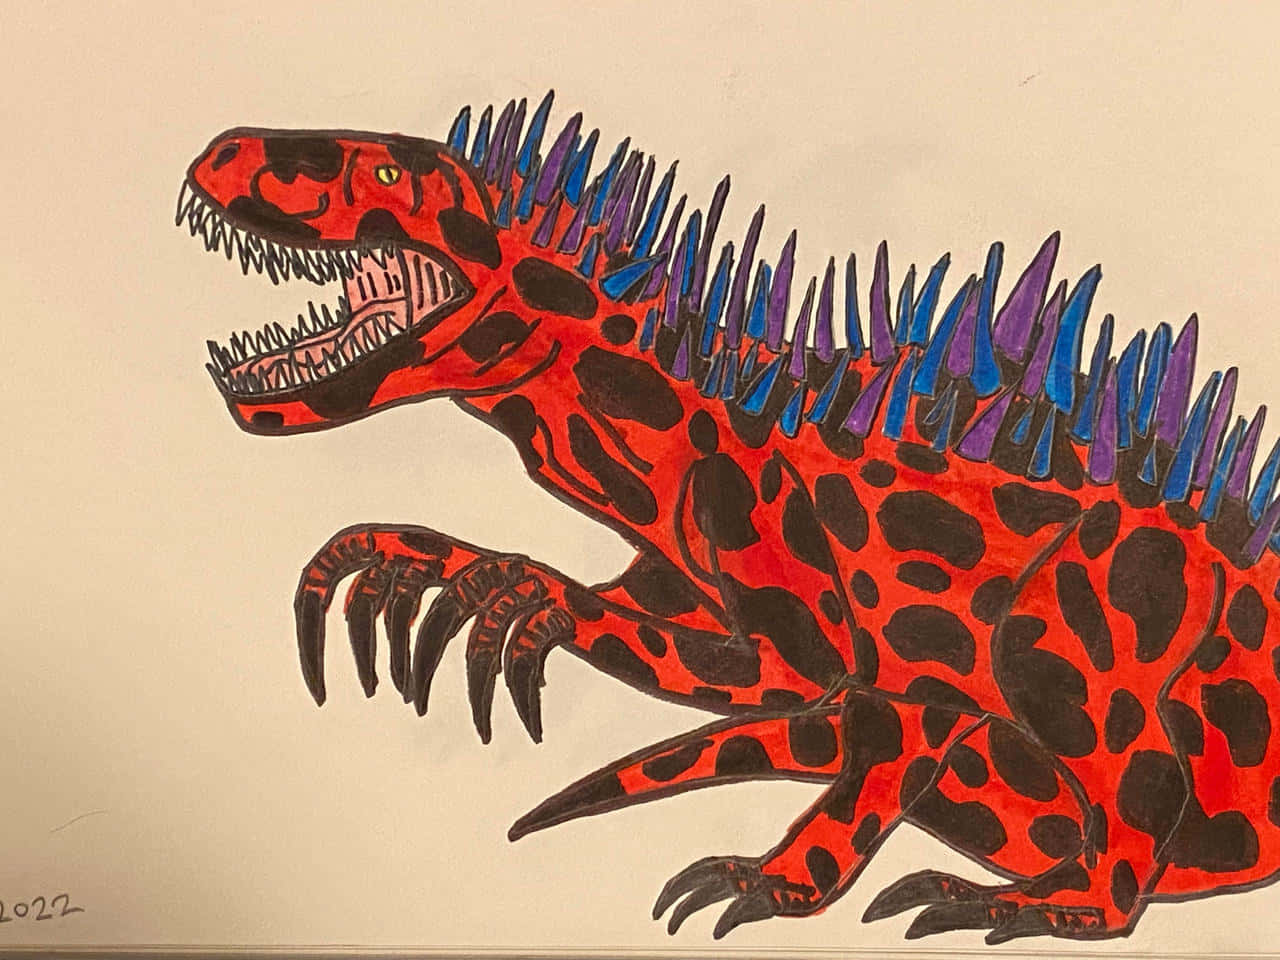 A Detailed Illustration of a Dinosaur